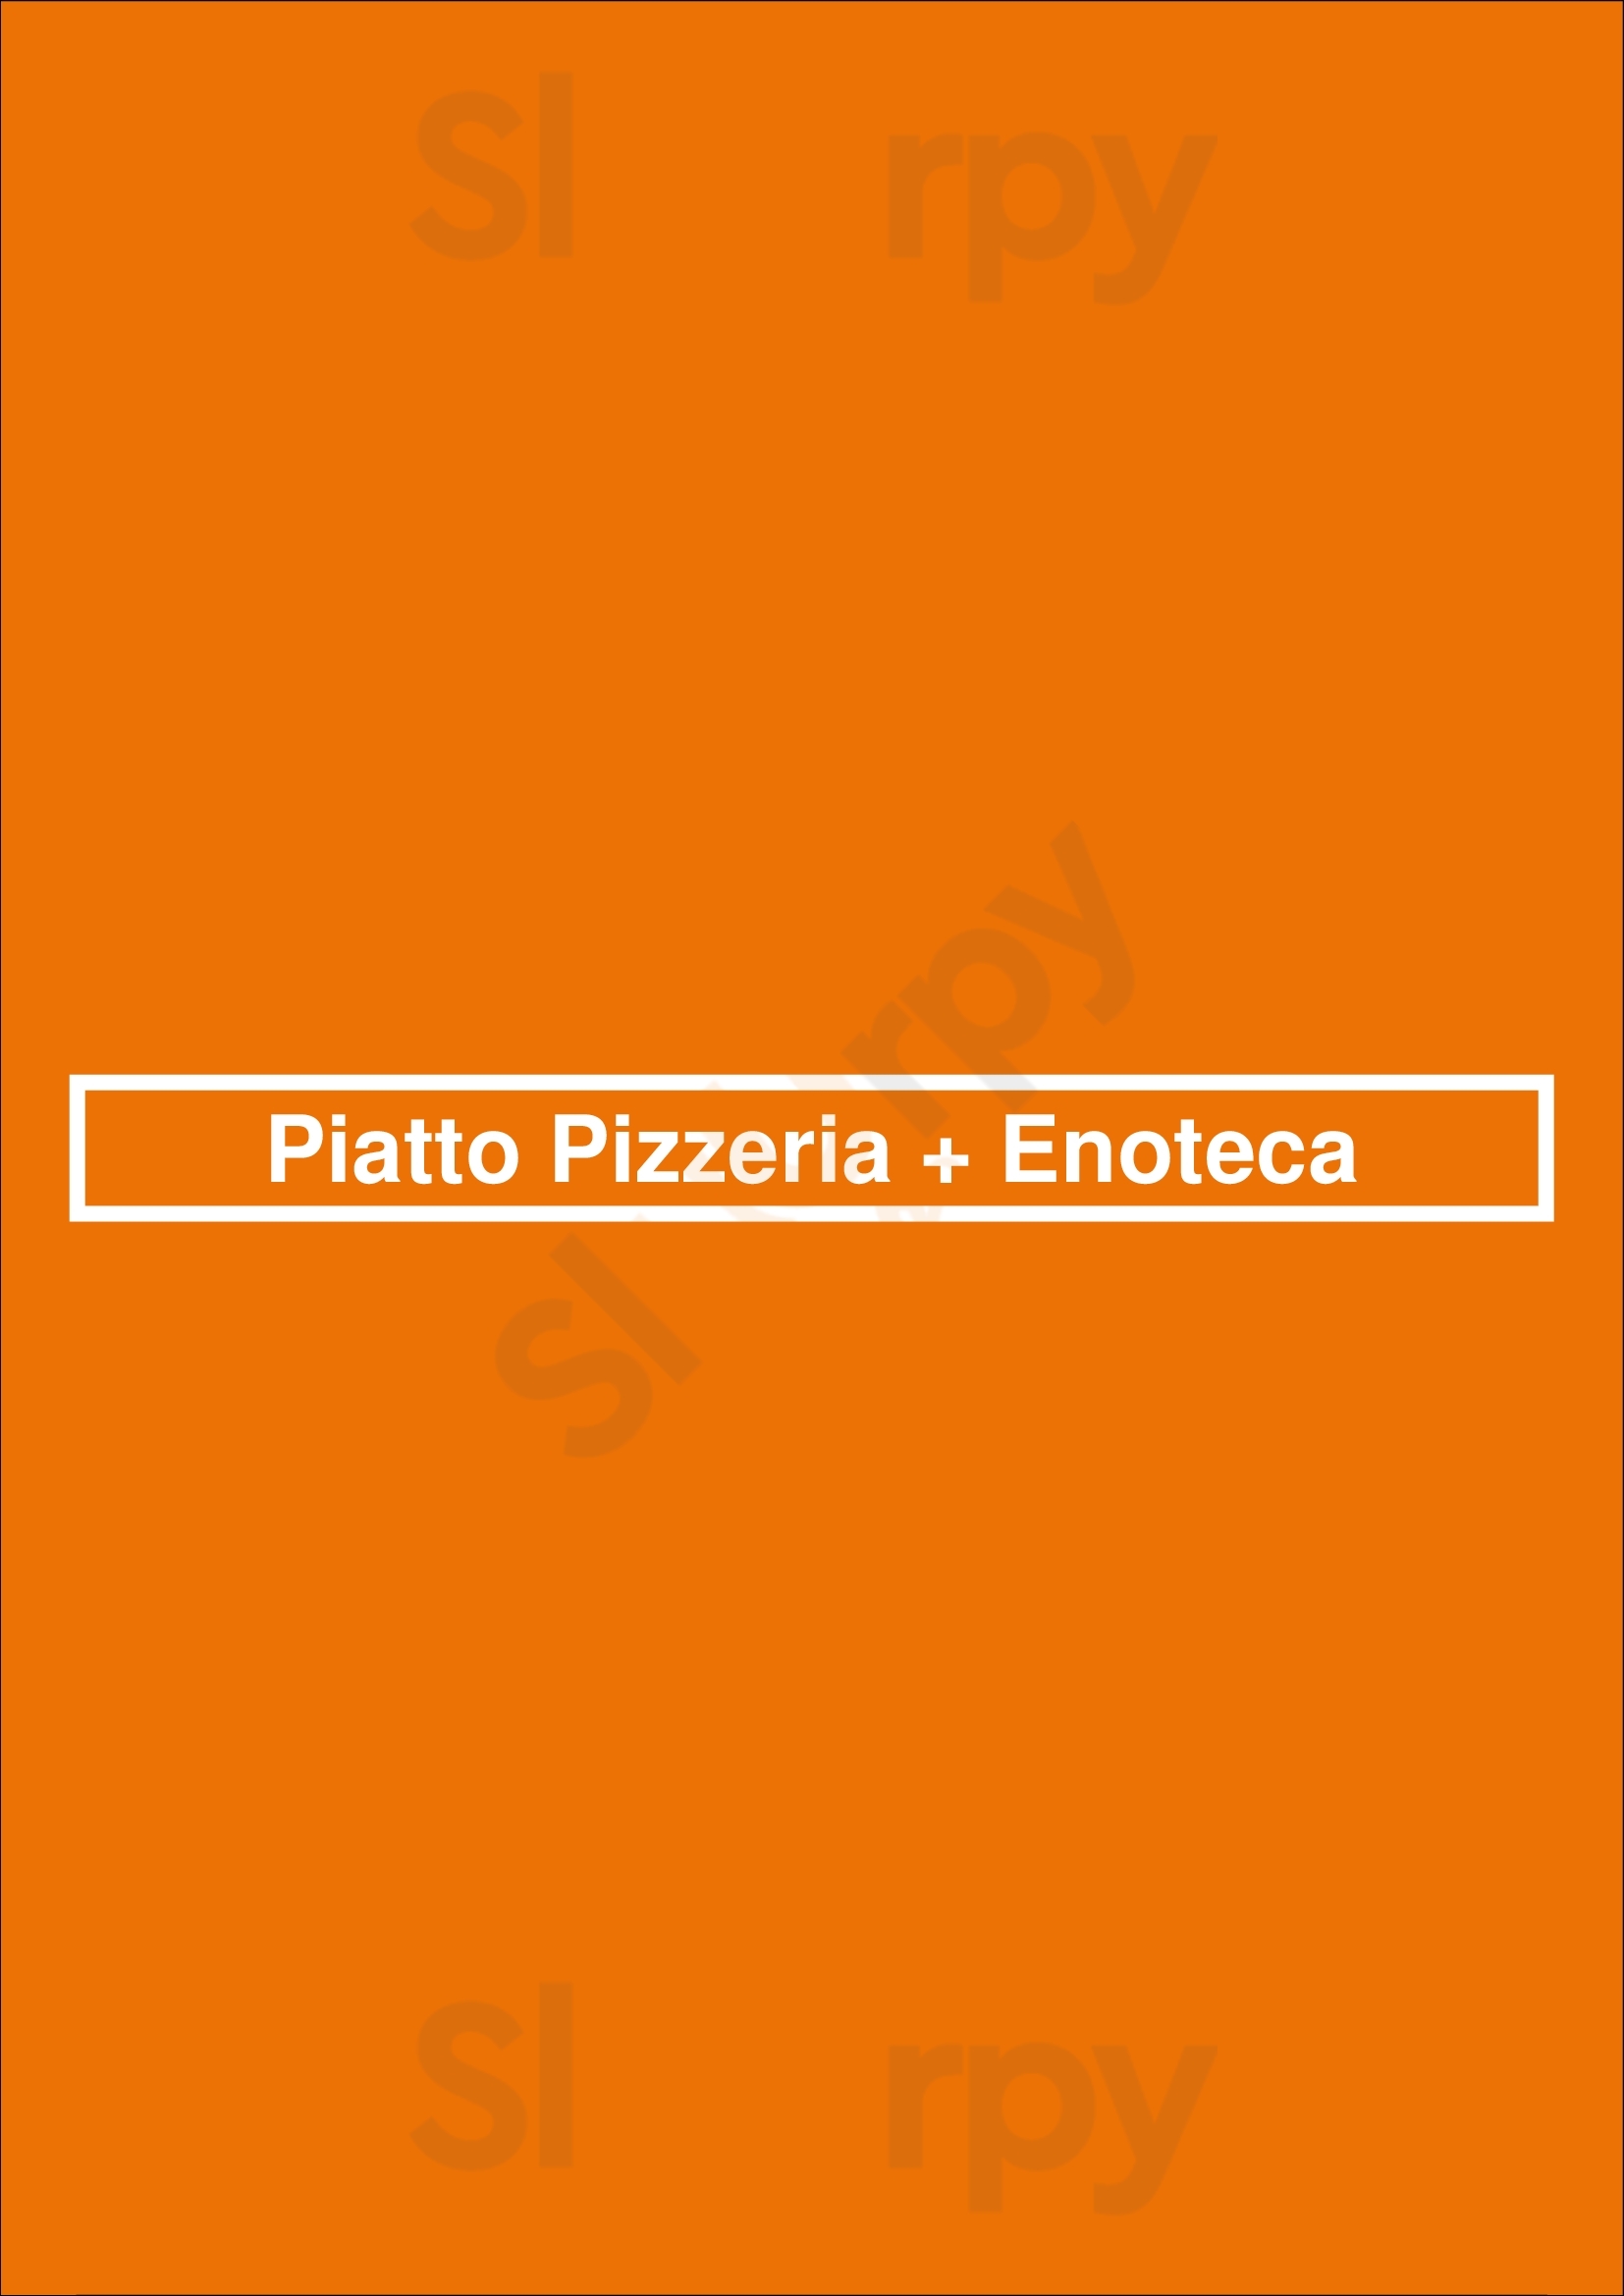 Piatto Pizzeria + Enoteca Charlottetown Menu - 1